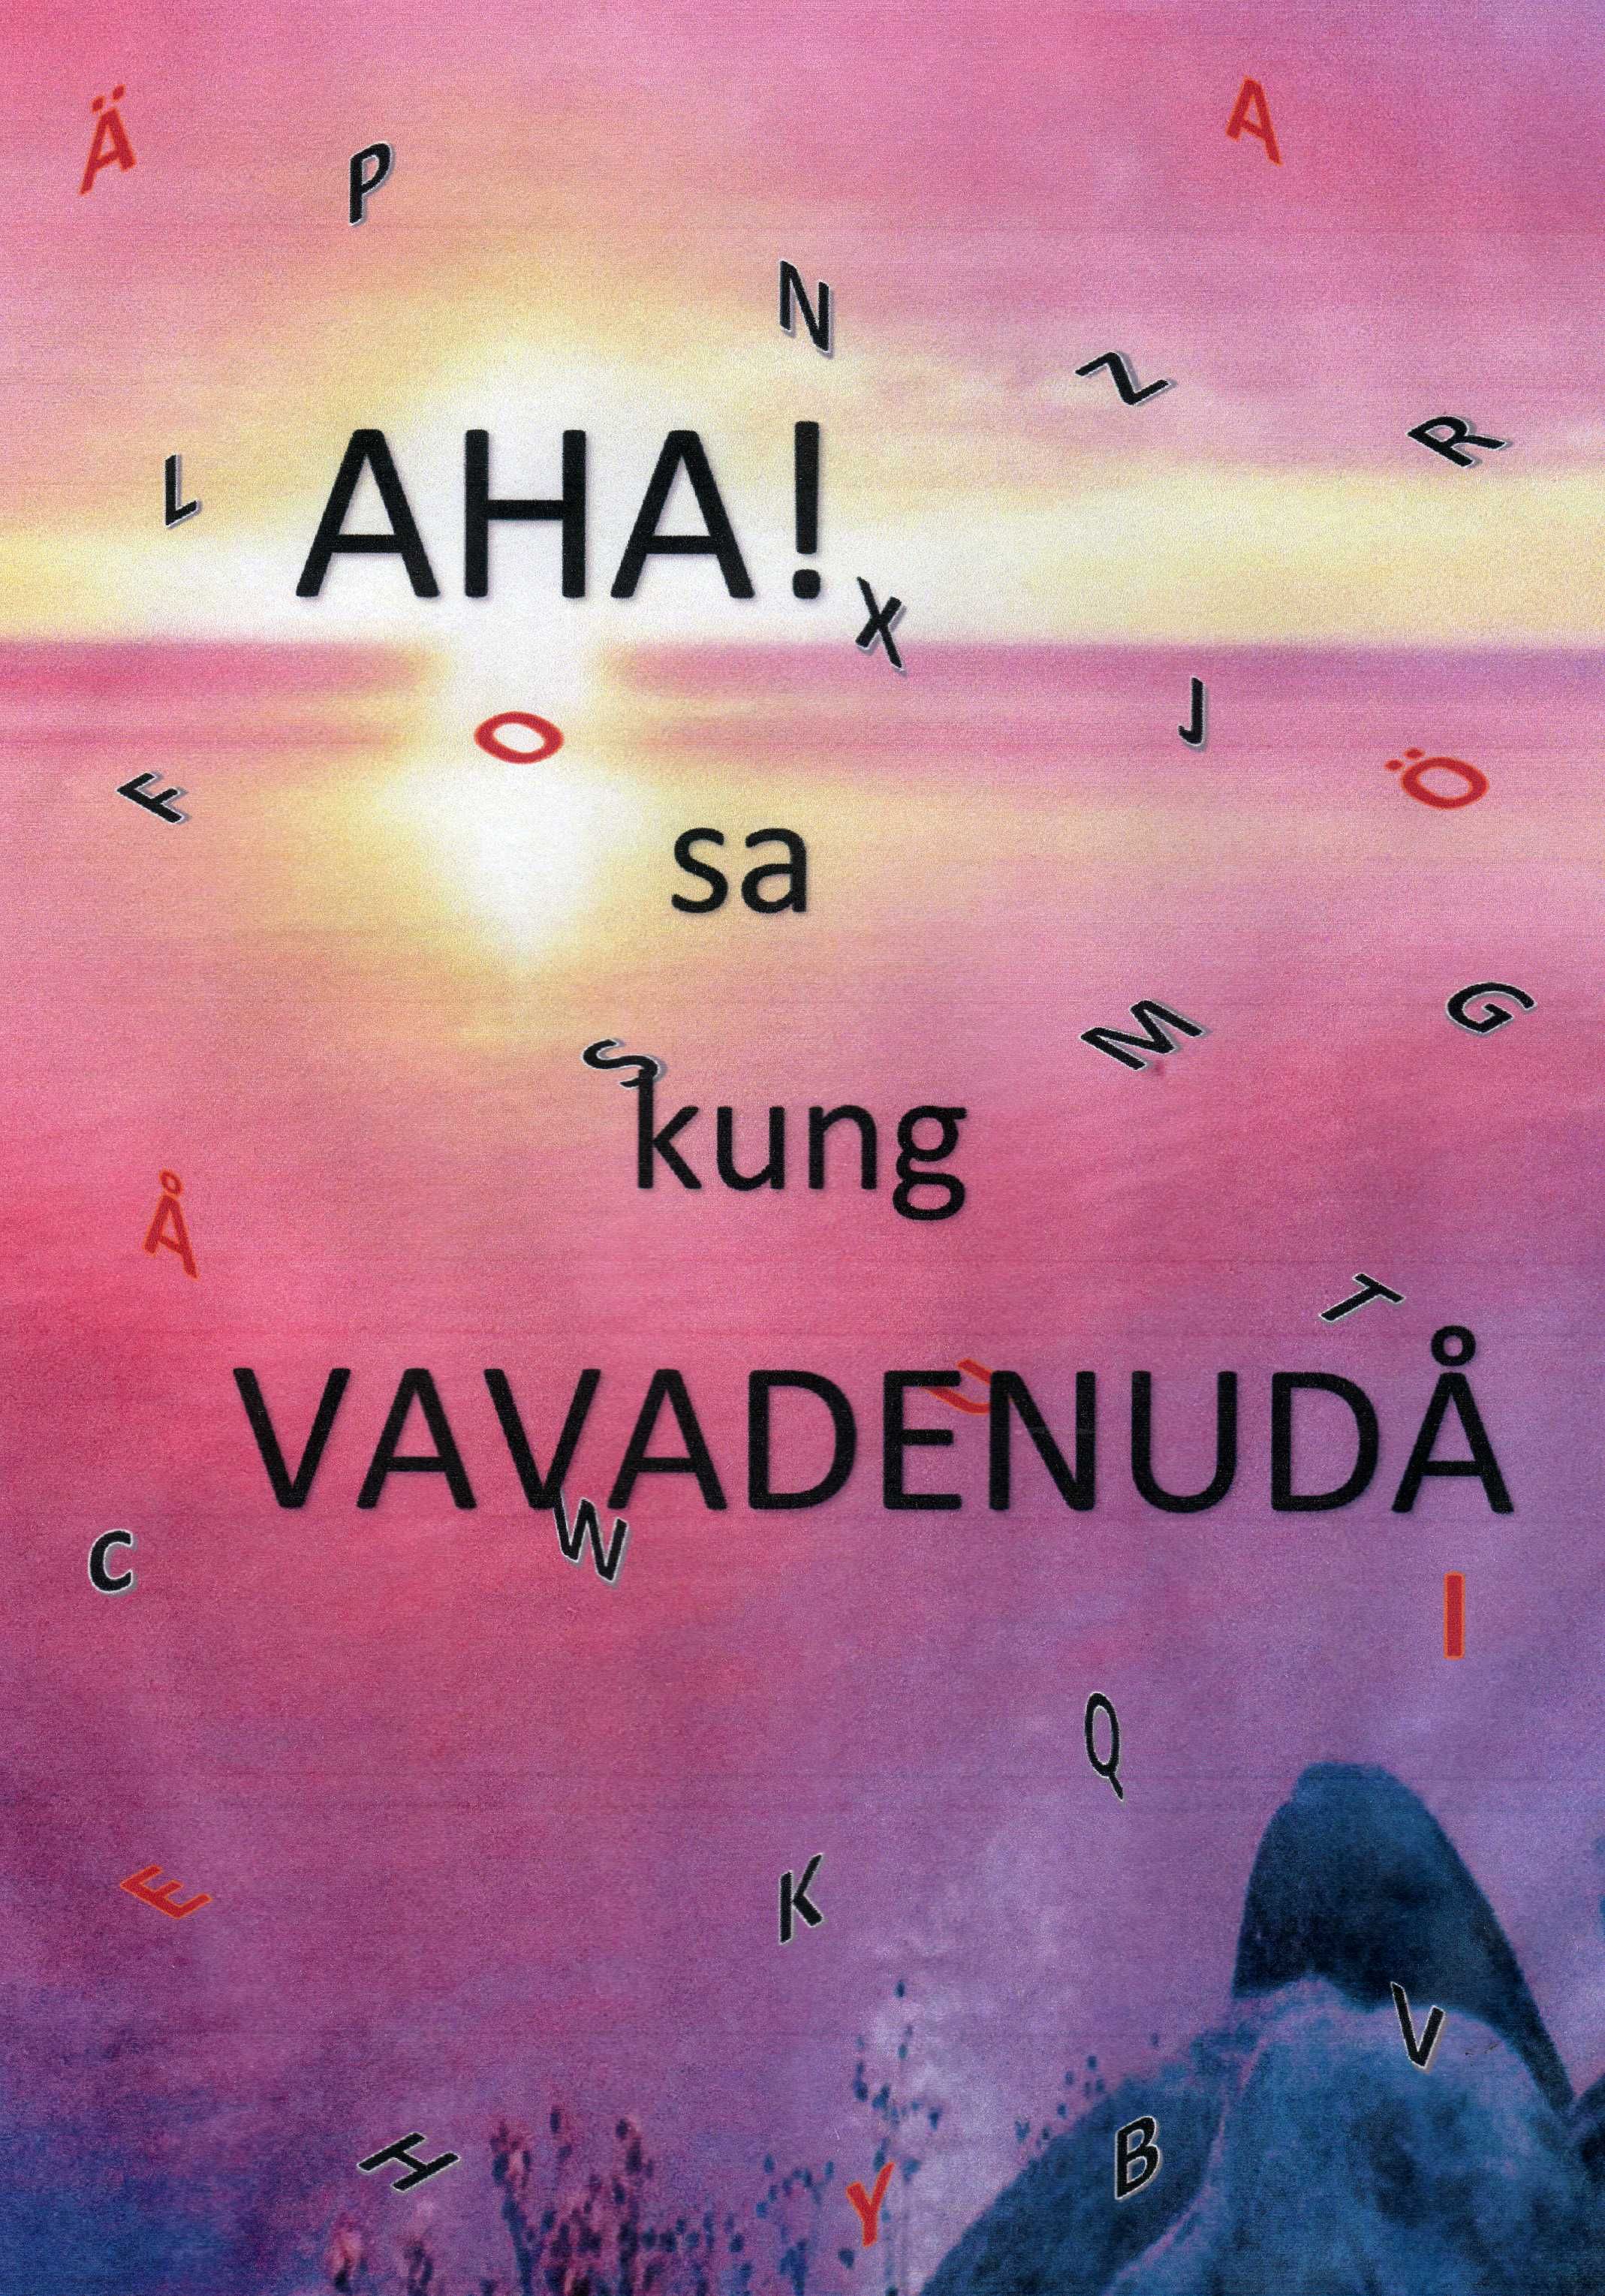 AHA! sa kung VAVADENUDÅ, eBook by Marianne Gutler Lindström